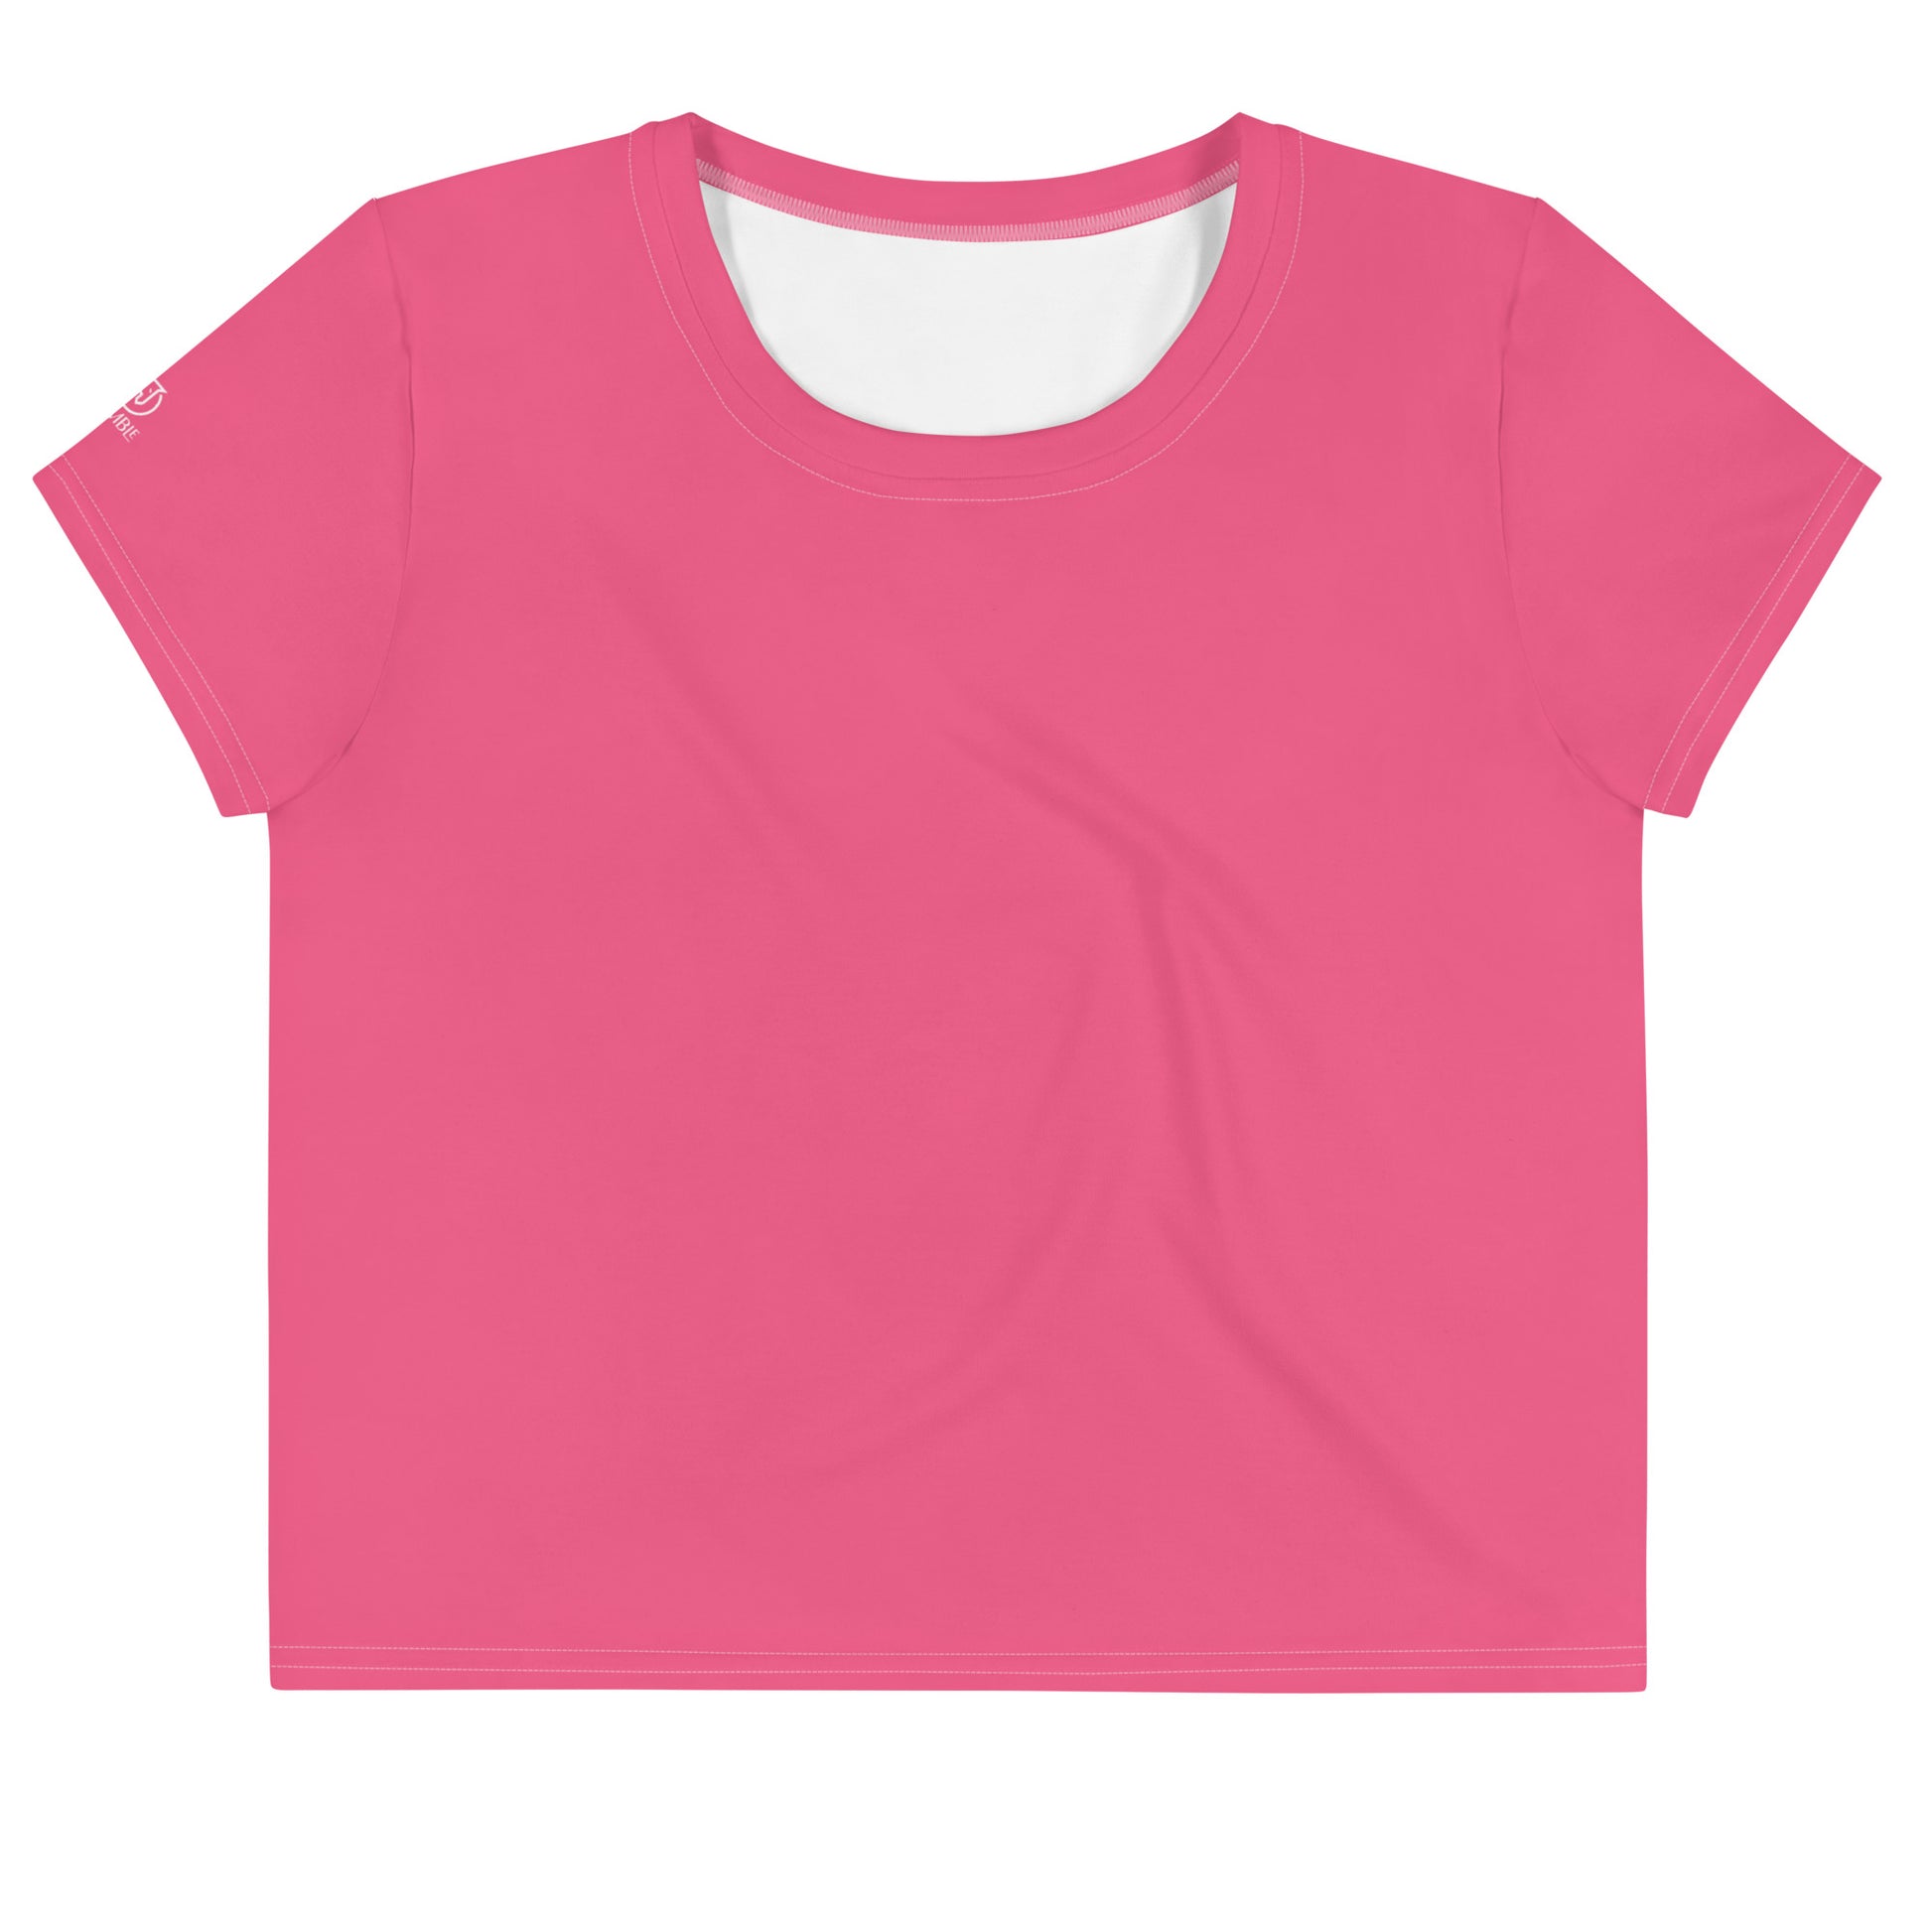 Humble Sportswear, women's minimal Color Match madison pink short sleeve crop t-shirt